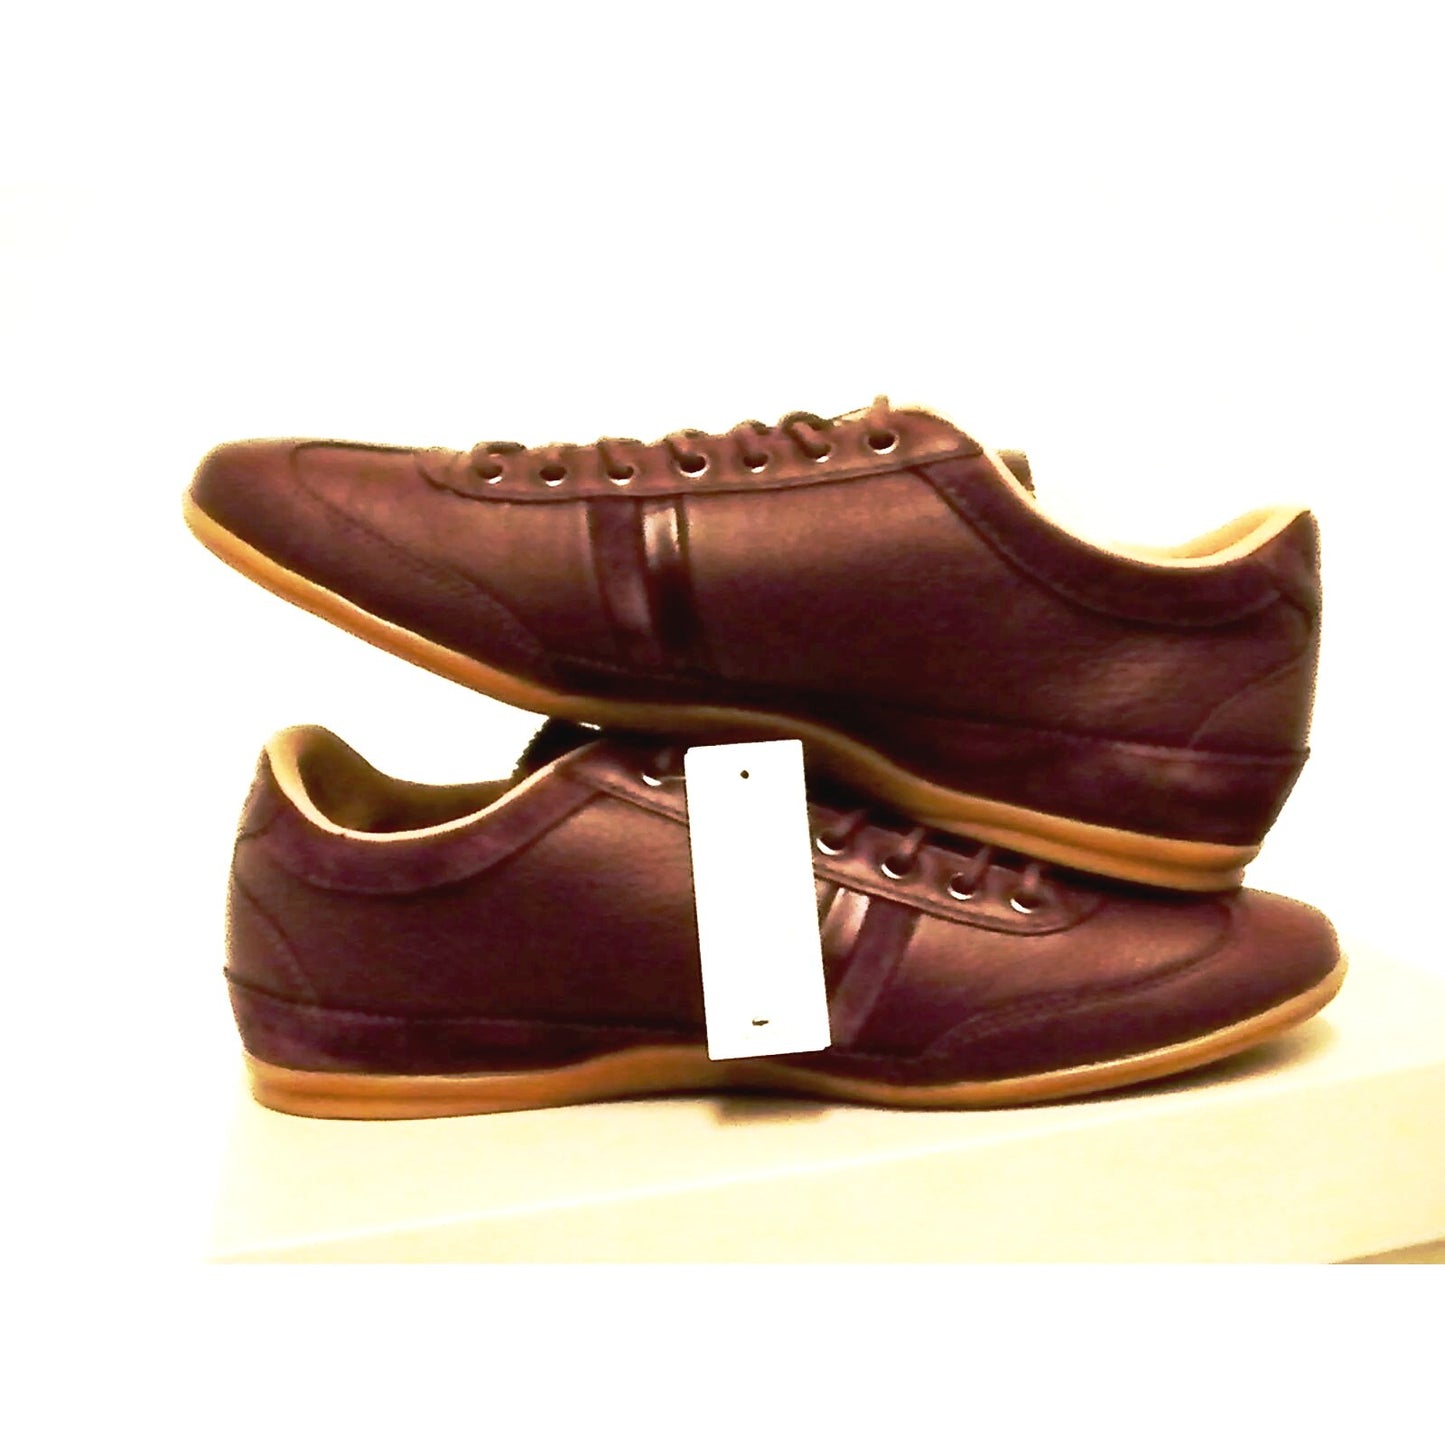 Lacoste casual shoes misano 36 spm dark brown size 7.5 us men